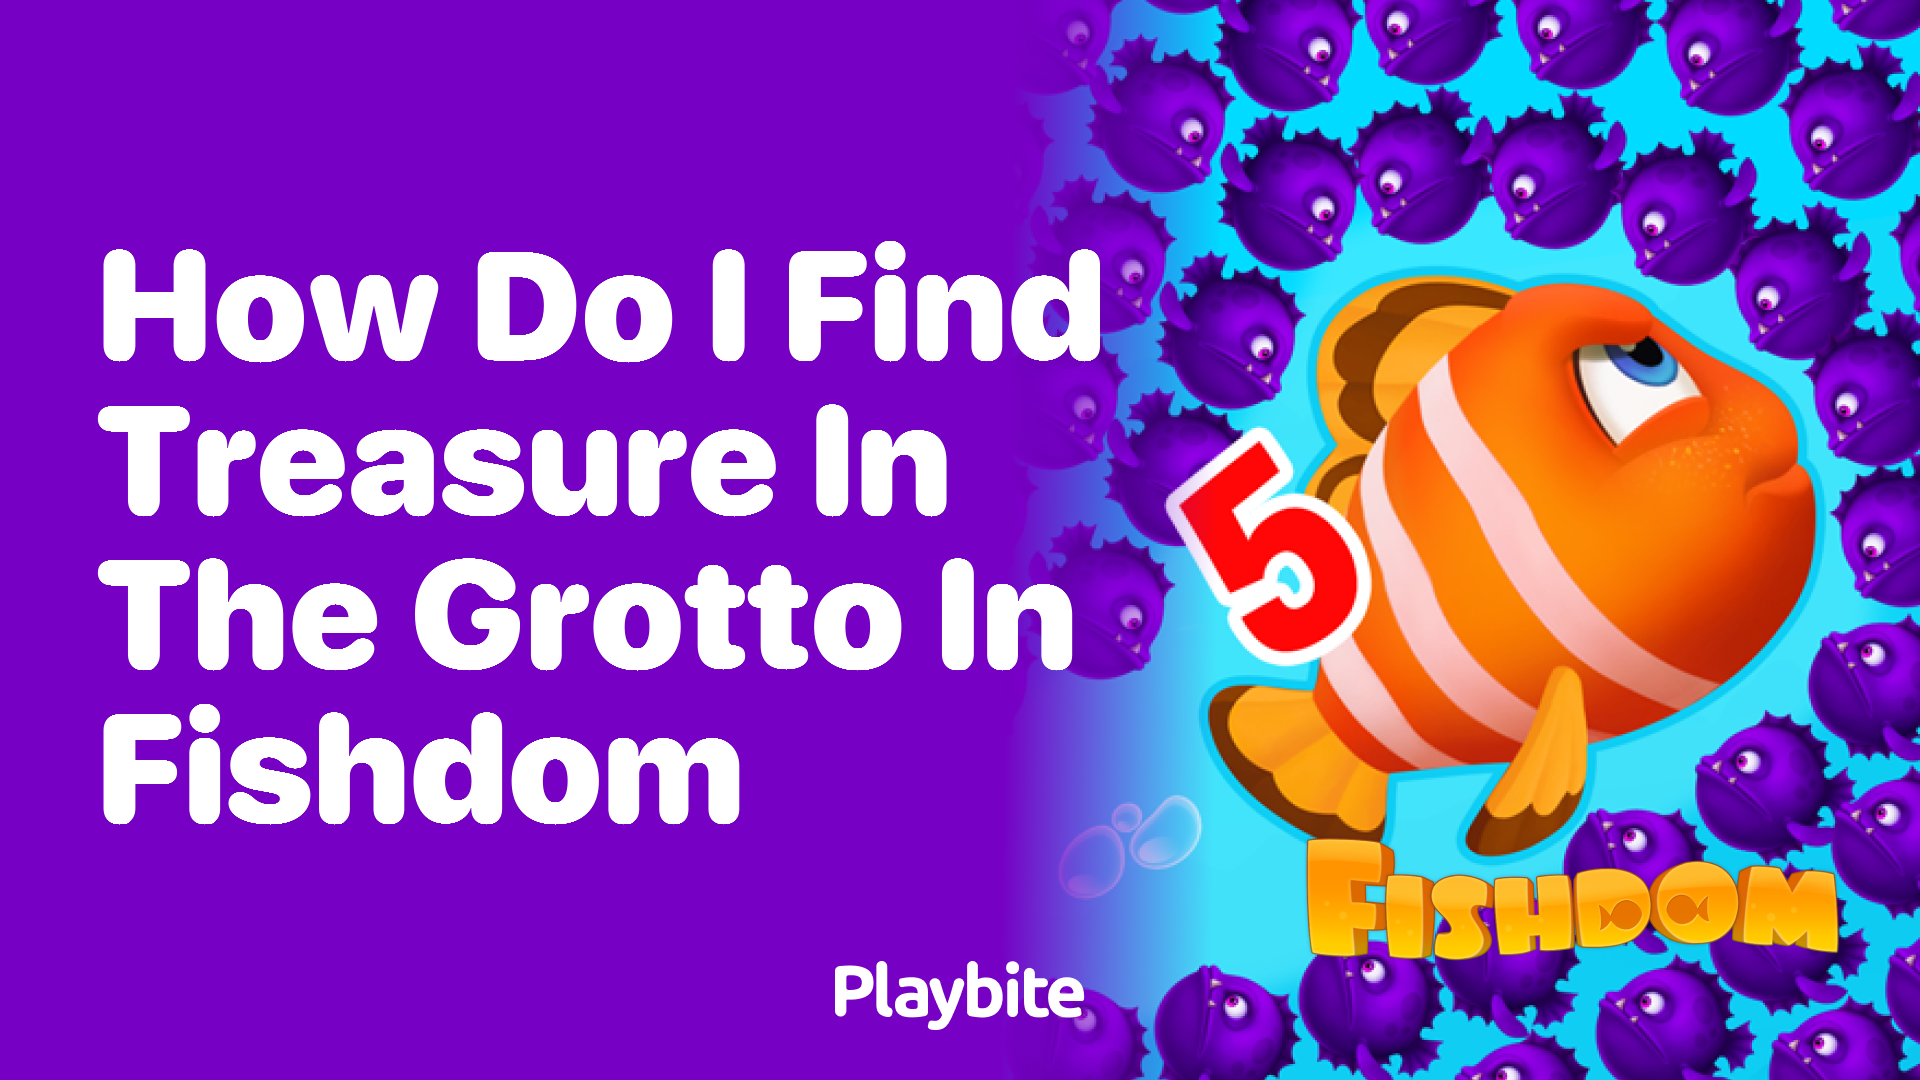 How Do I Find Treasure in the Grotto in Fishdom?